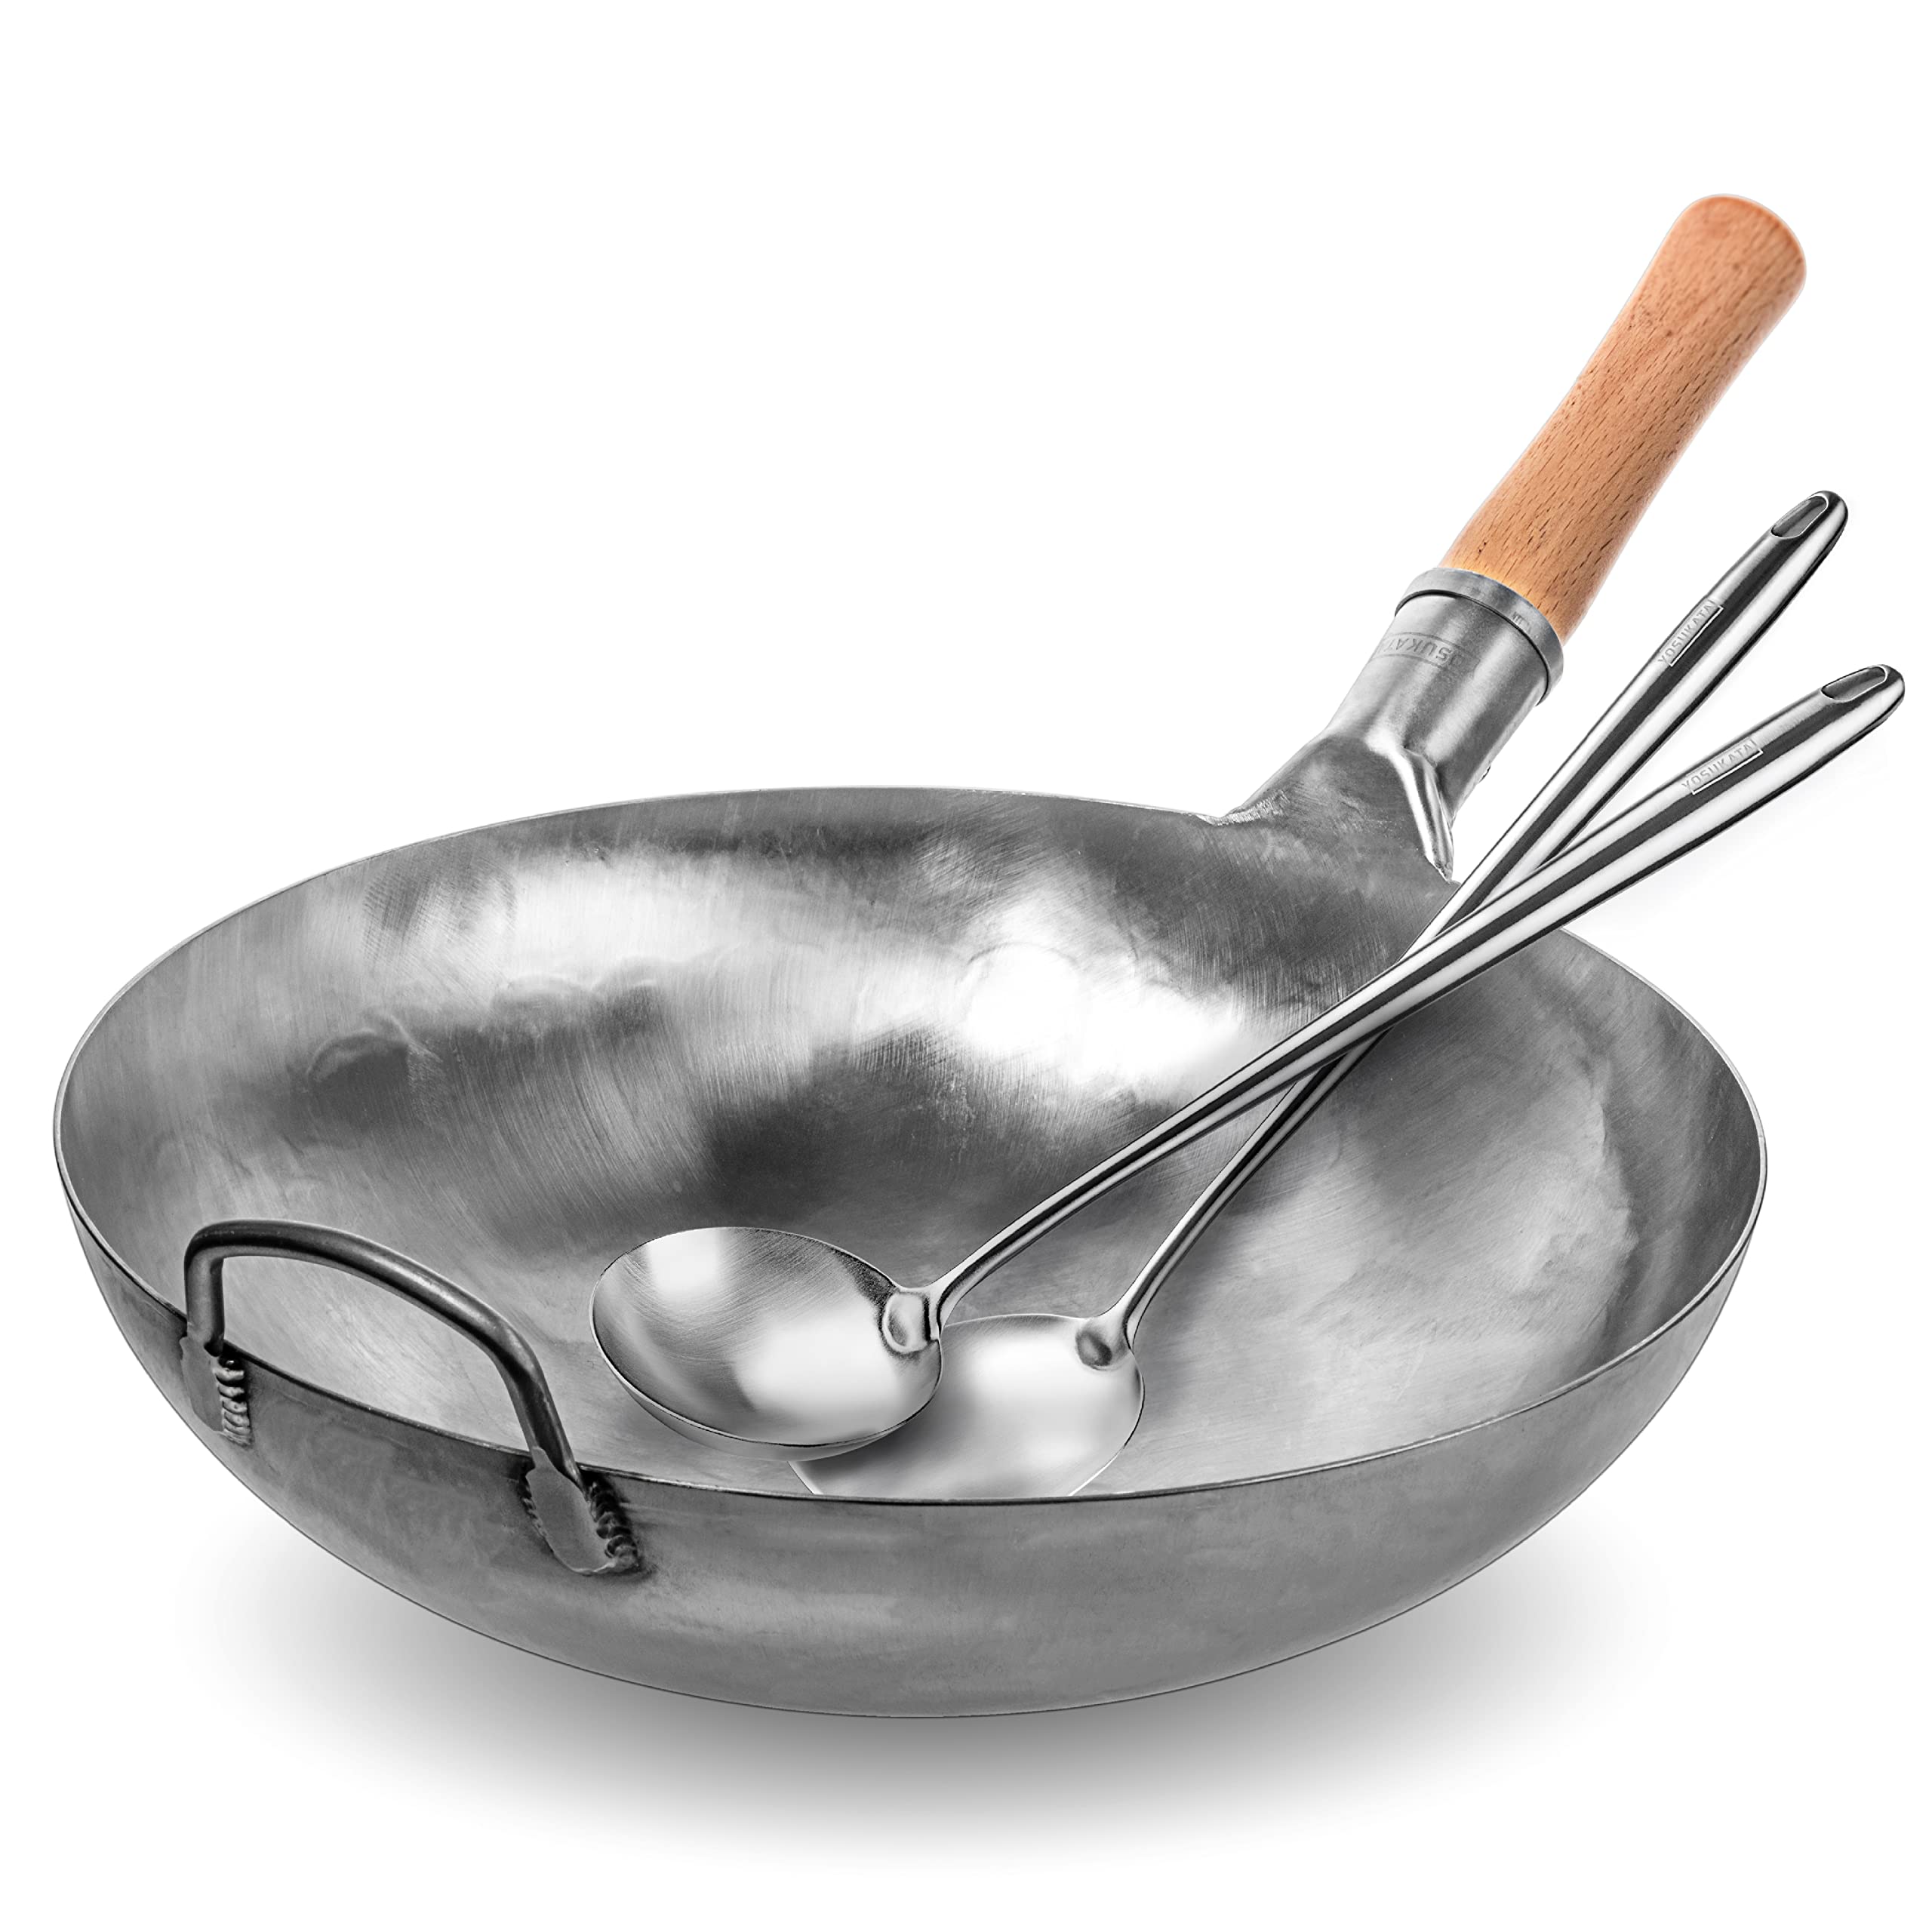 YOSUKATA Silver Round Bottom Wok Pan – 14" Woks and Stir Fry Pans 17’’ Wok Spatula and Ladle - Set of 2 Heat-Resistant Wok Tools - Universal Wok Ladle Flat Bottom Pow Wok